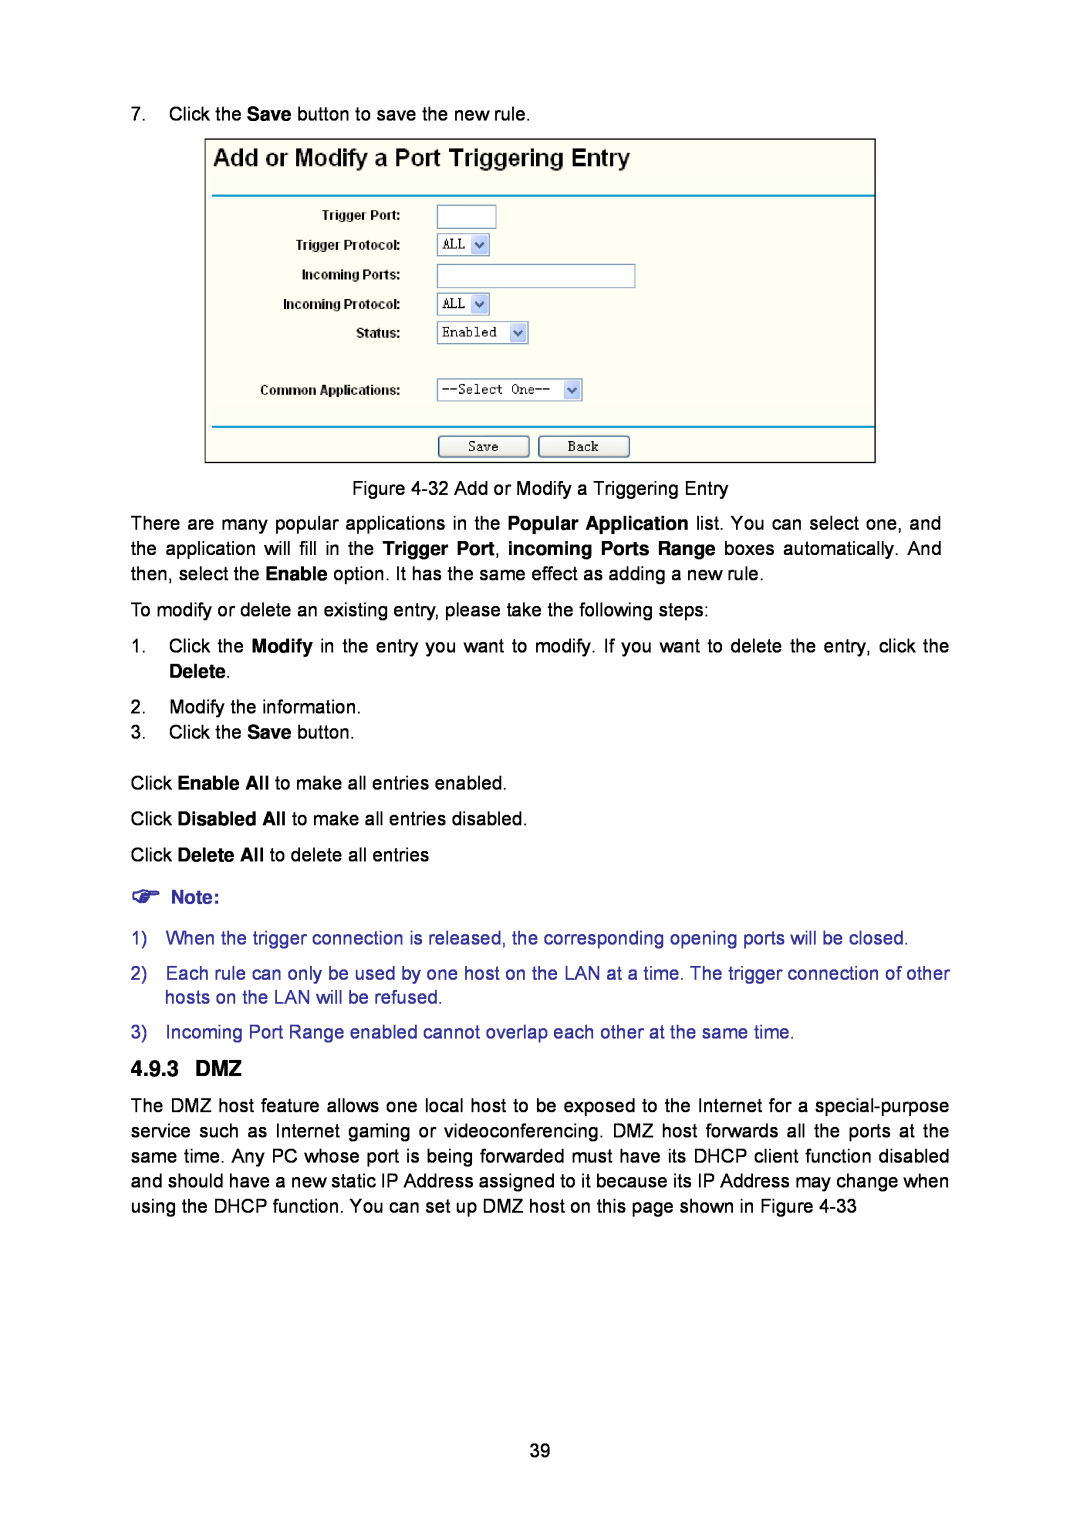 TP-Link TL-WA5110G manual 4.9.3 DMZ 